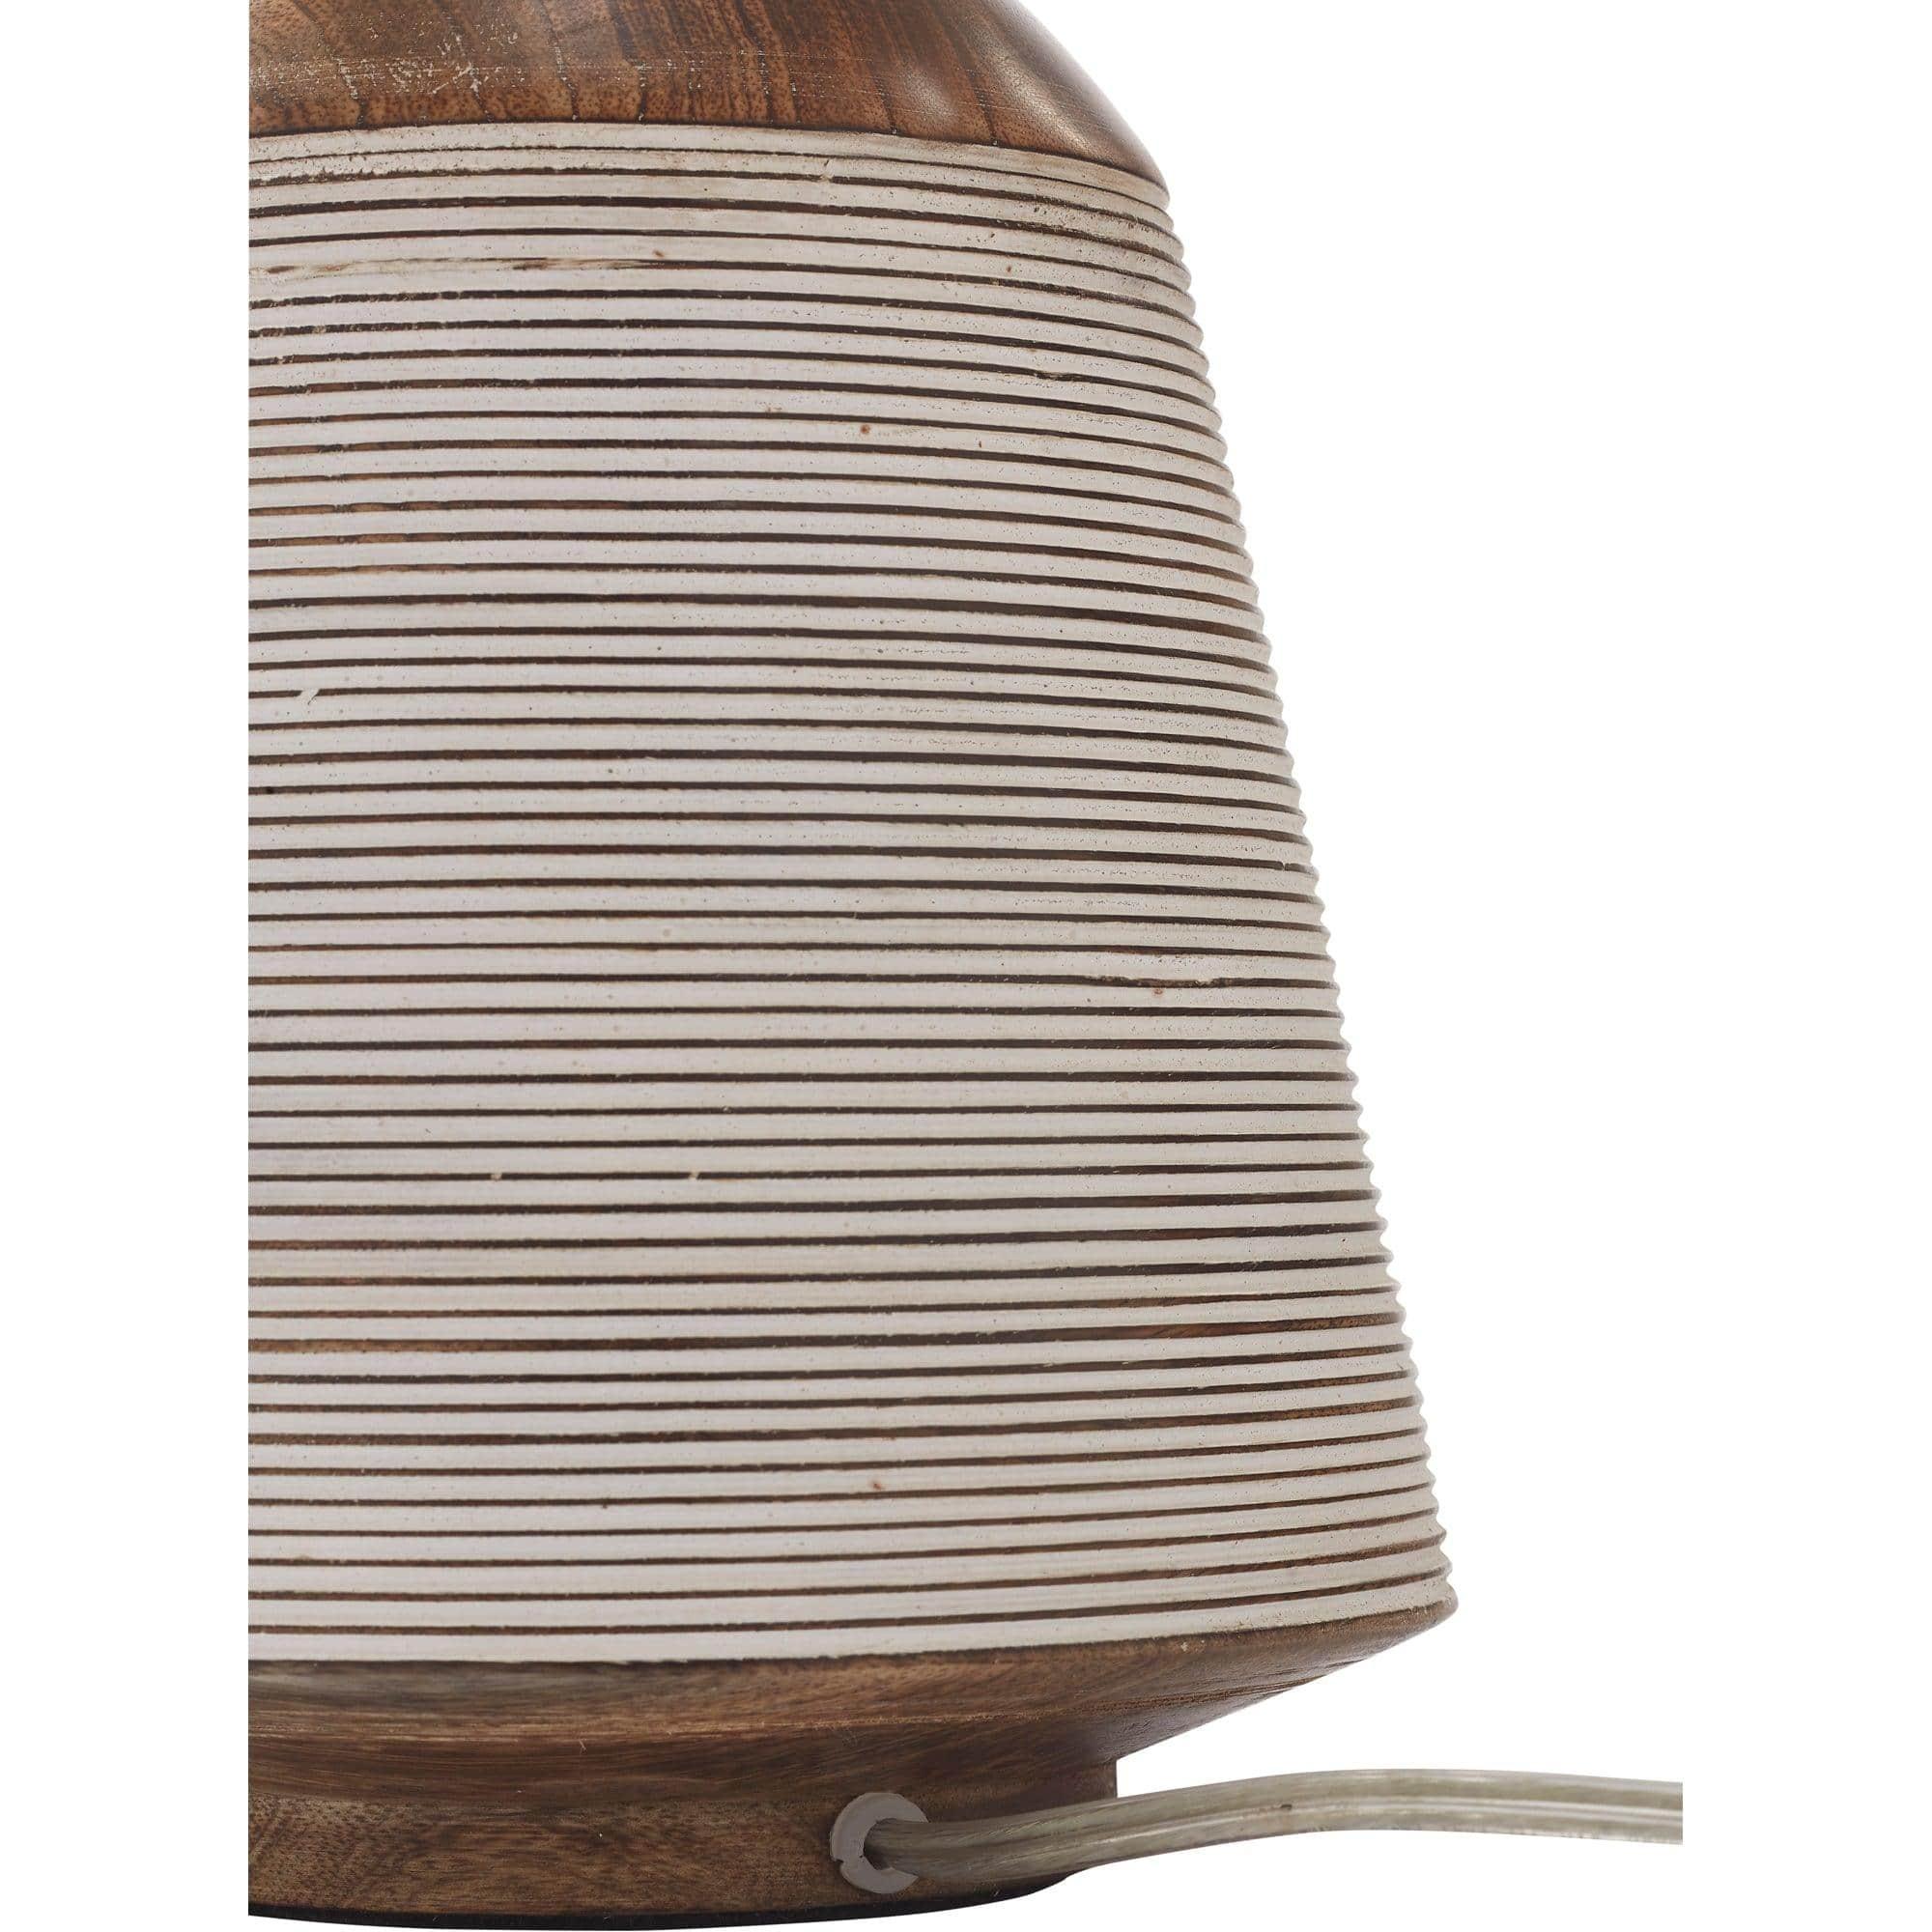 Renwil - Botwood Table Lamp - LPT1159 | Montreal Lighting & Hardware